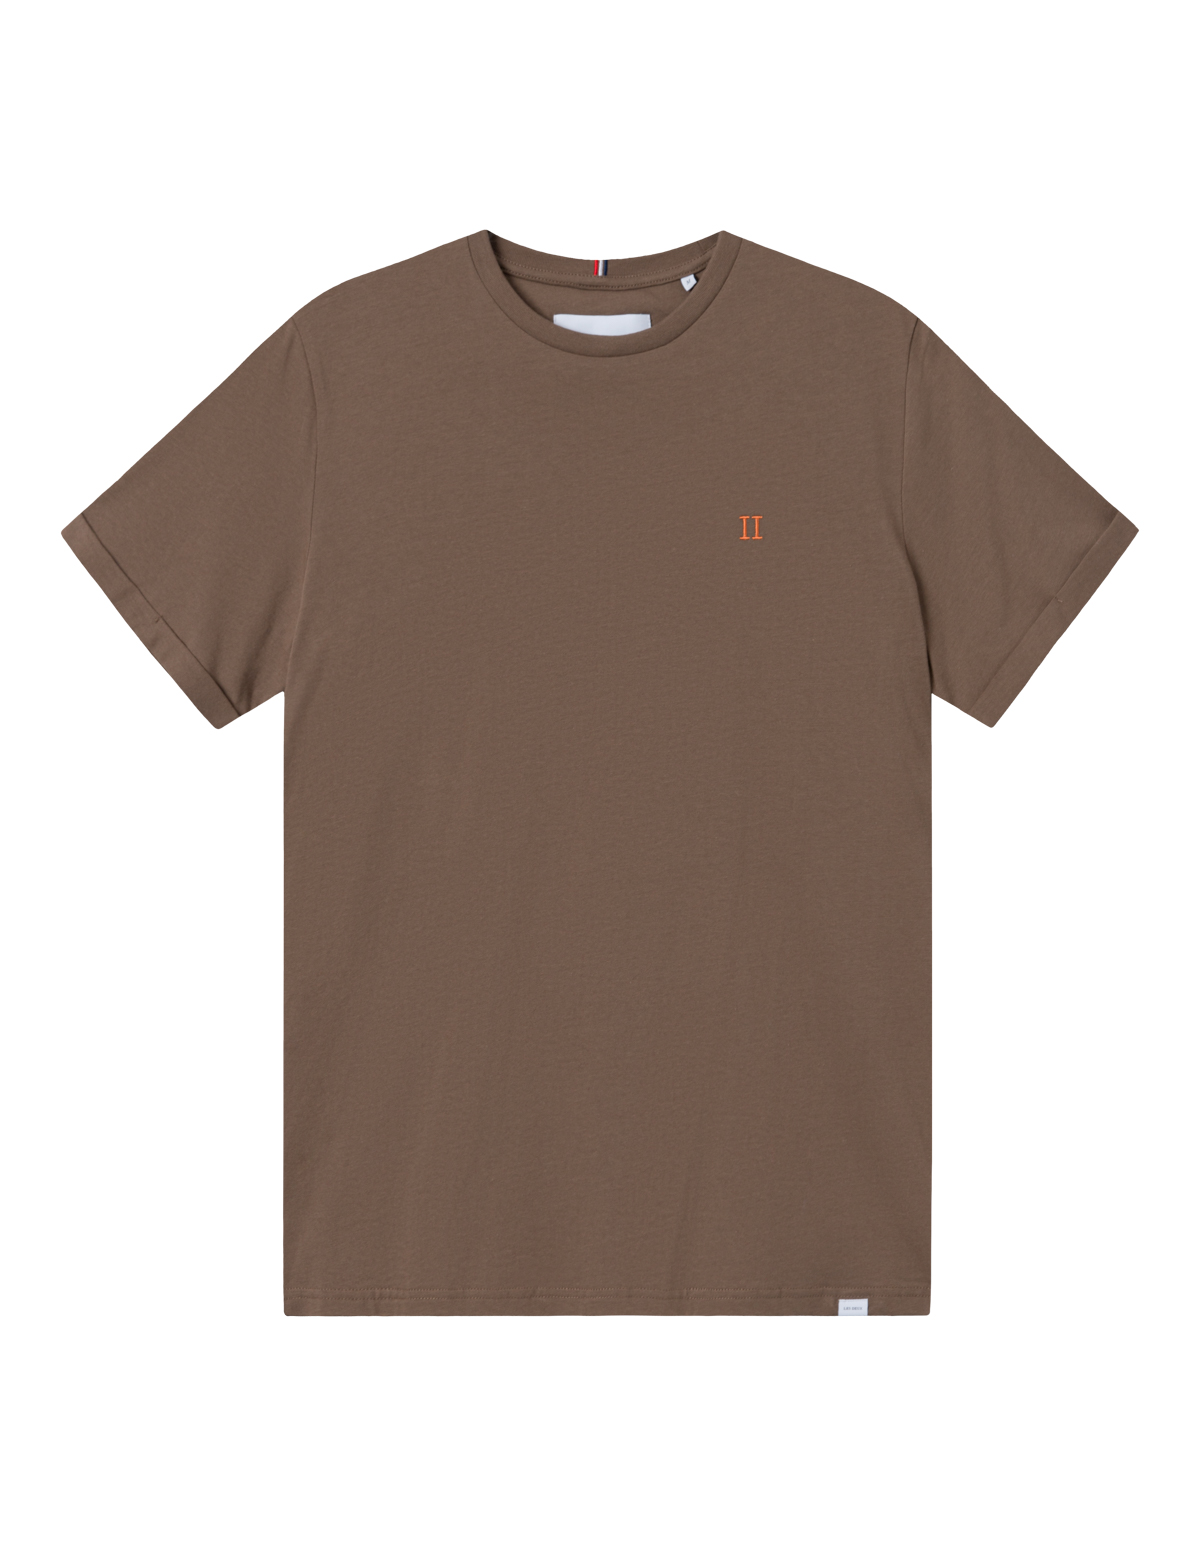 Les Deux Nørregaard T-shirt, Mountain Grey, Small